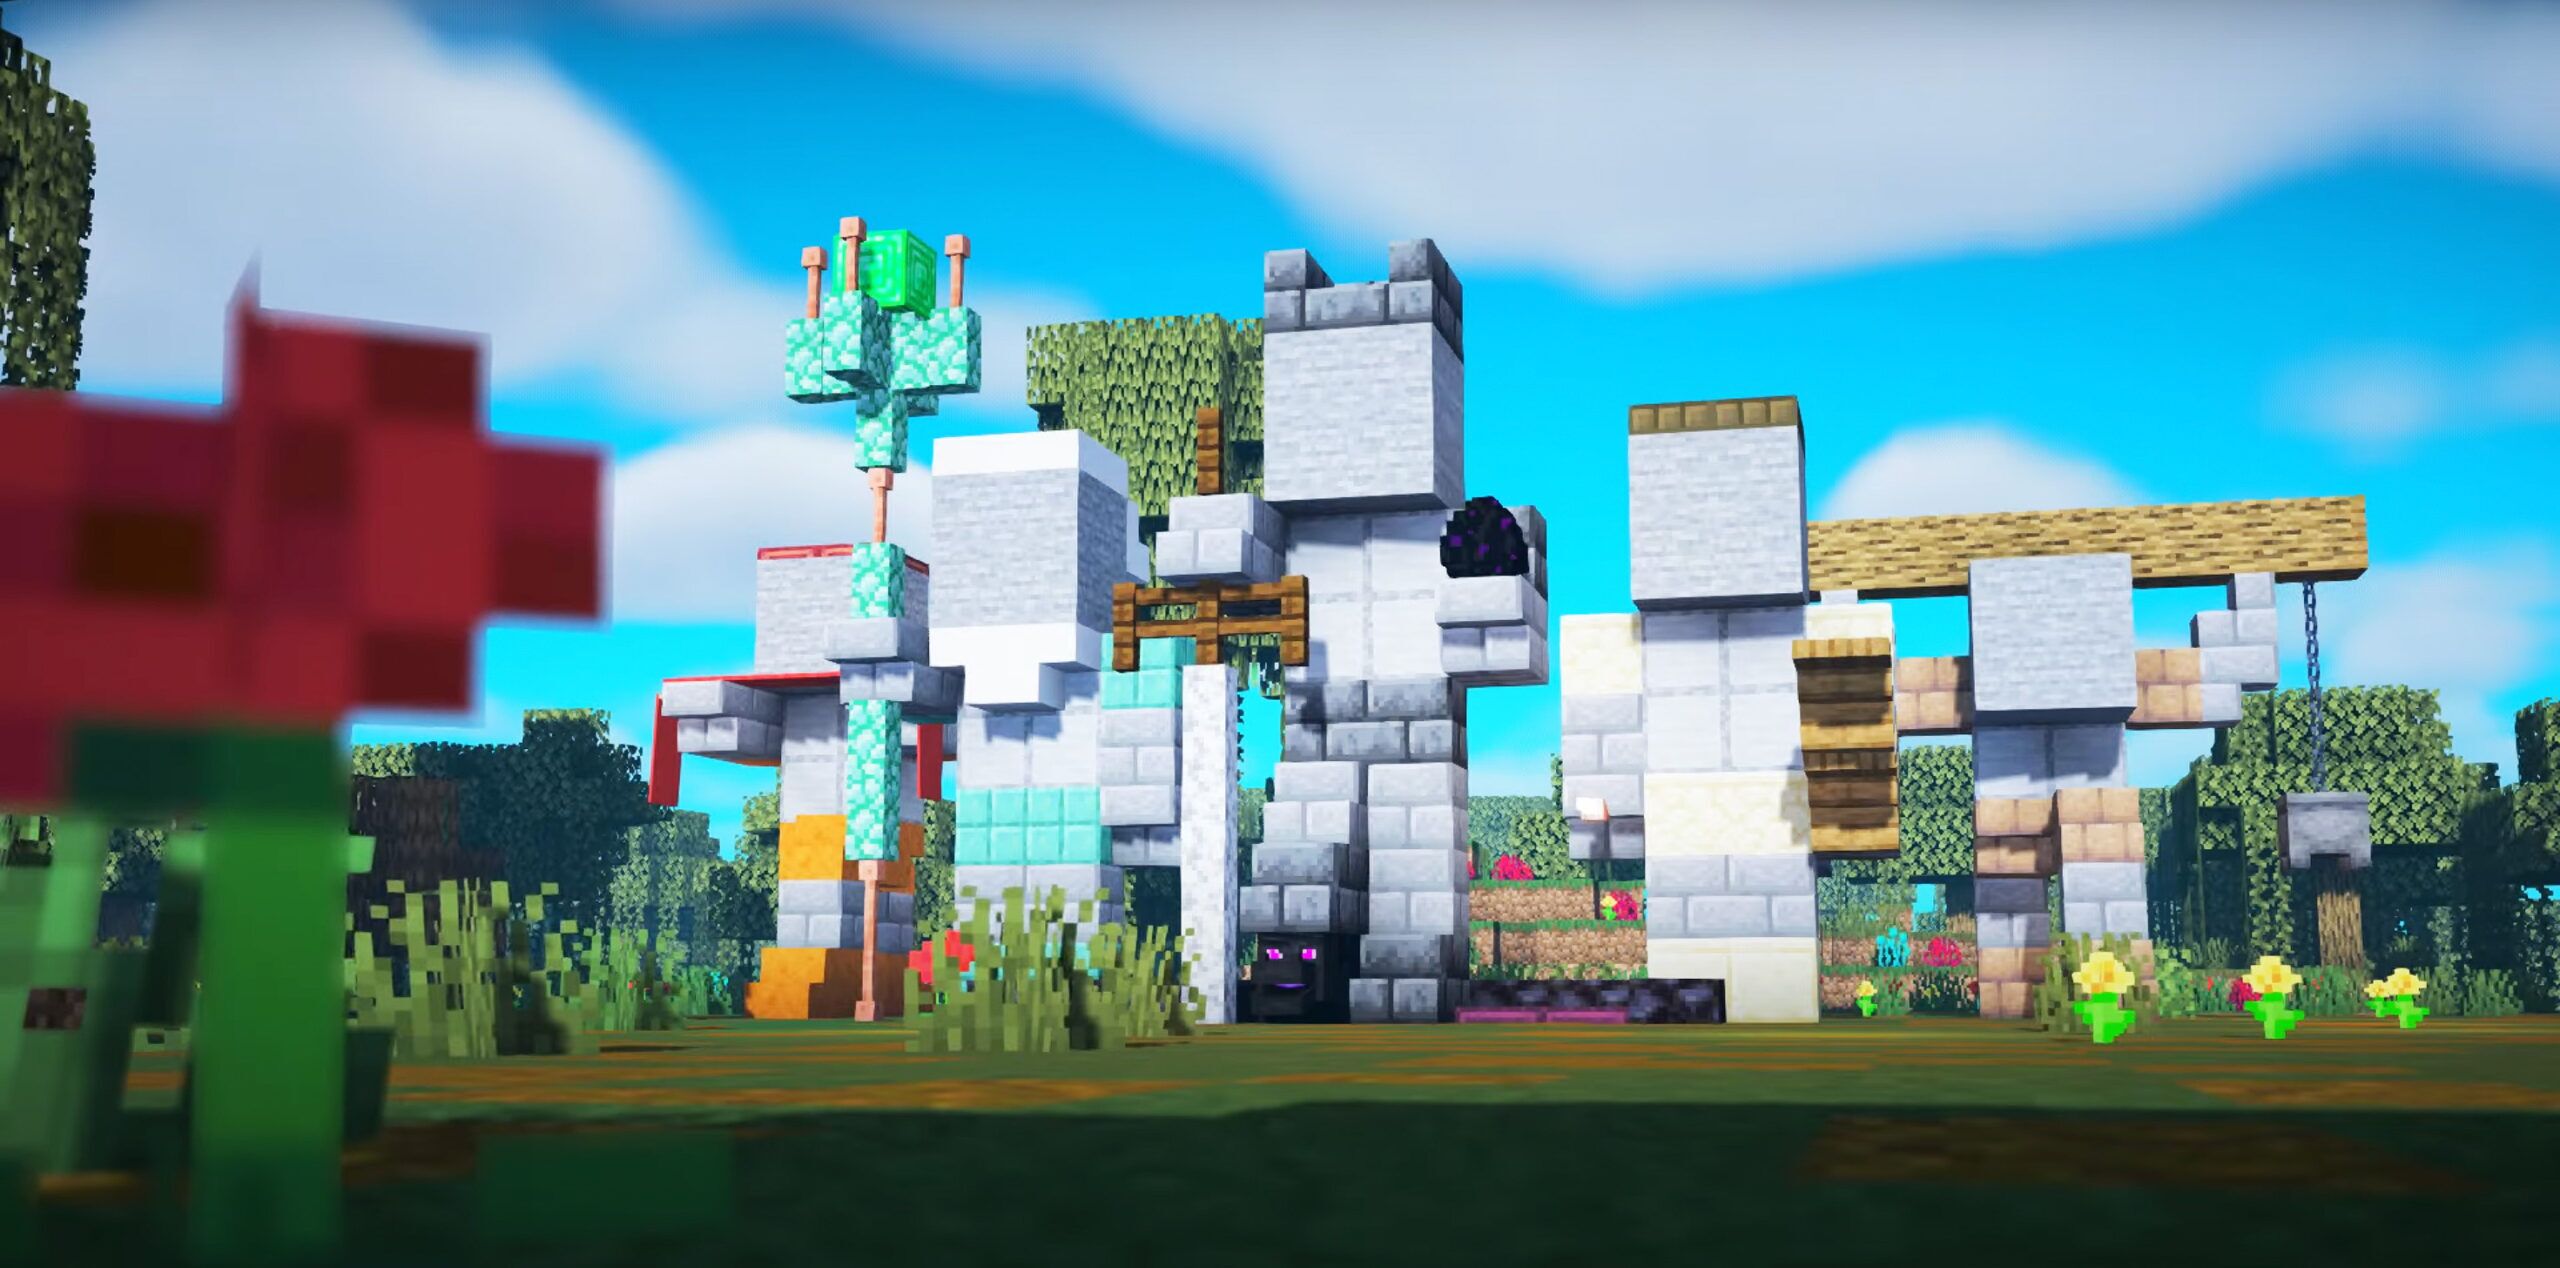 6 Coolest Minecraft Statue Ideas To Kickstart Your Creativity